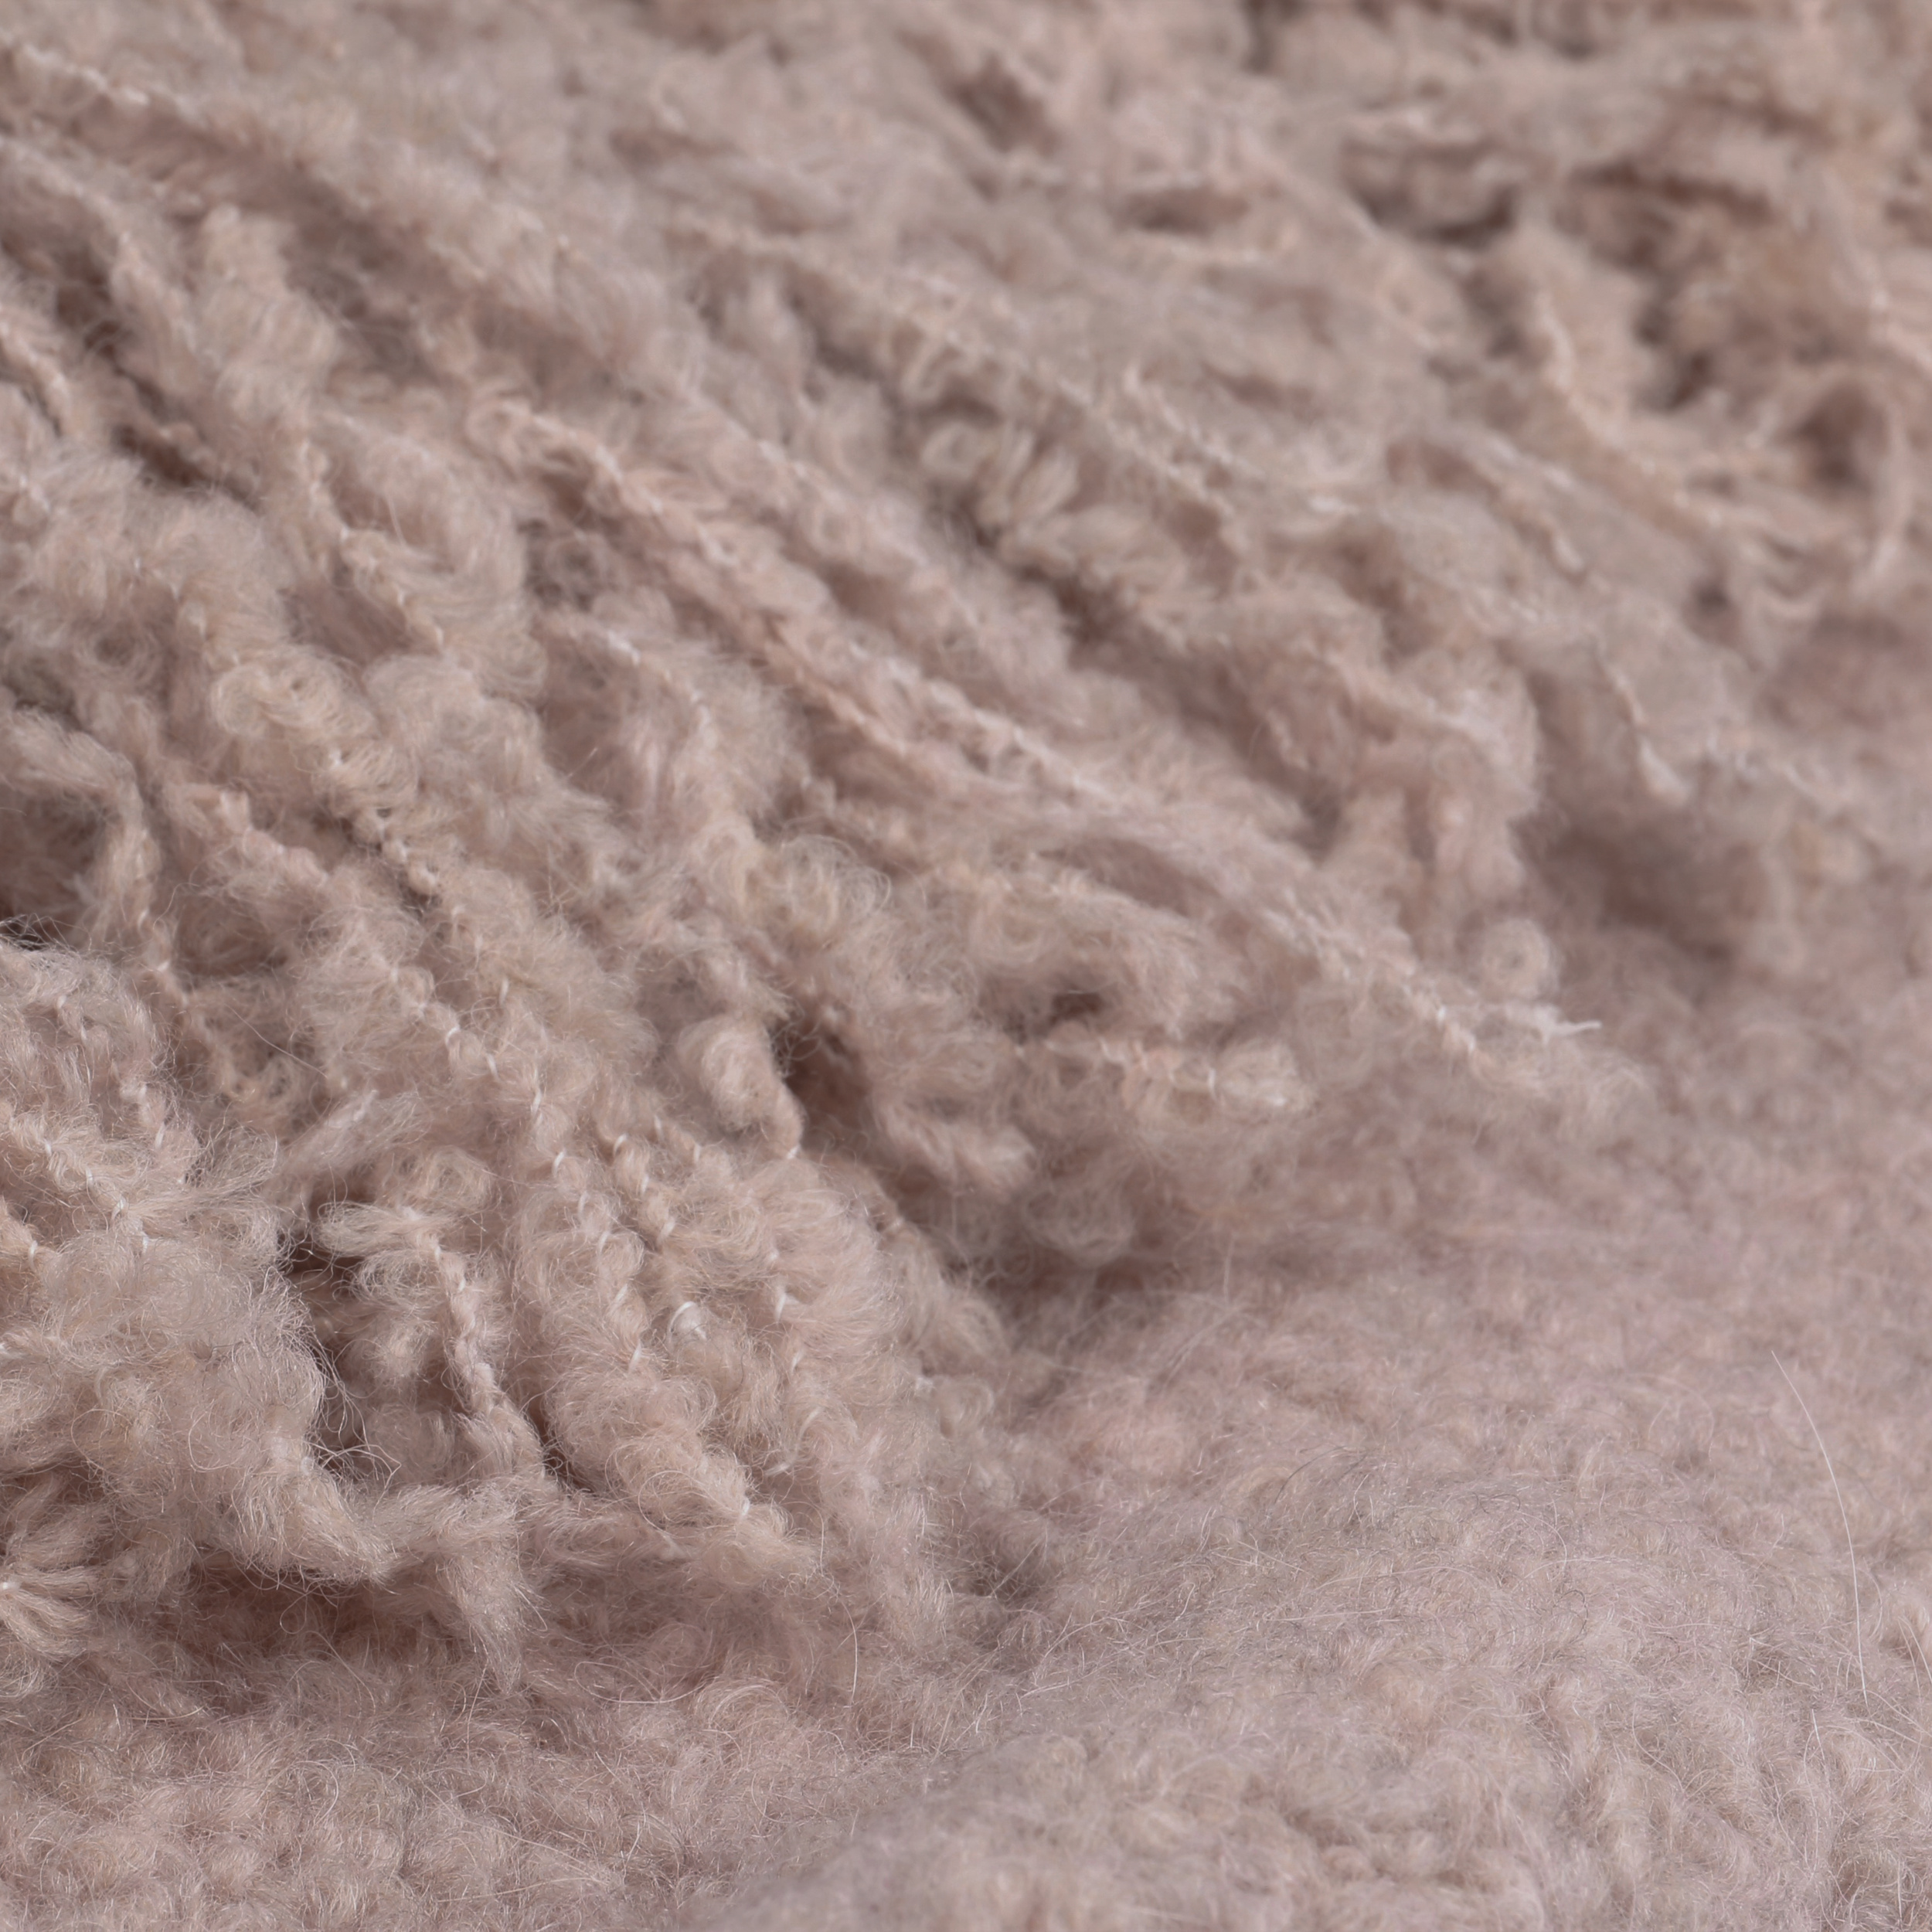 Bratz Alpaca Wool Scarf by bedacht - 103,95 €